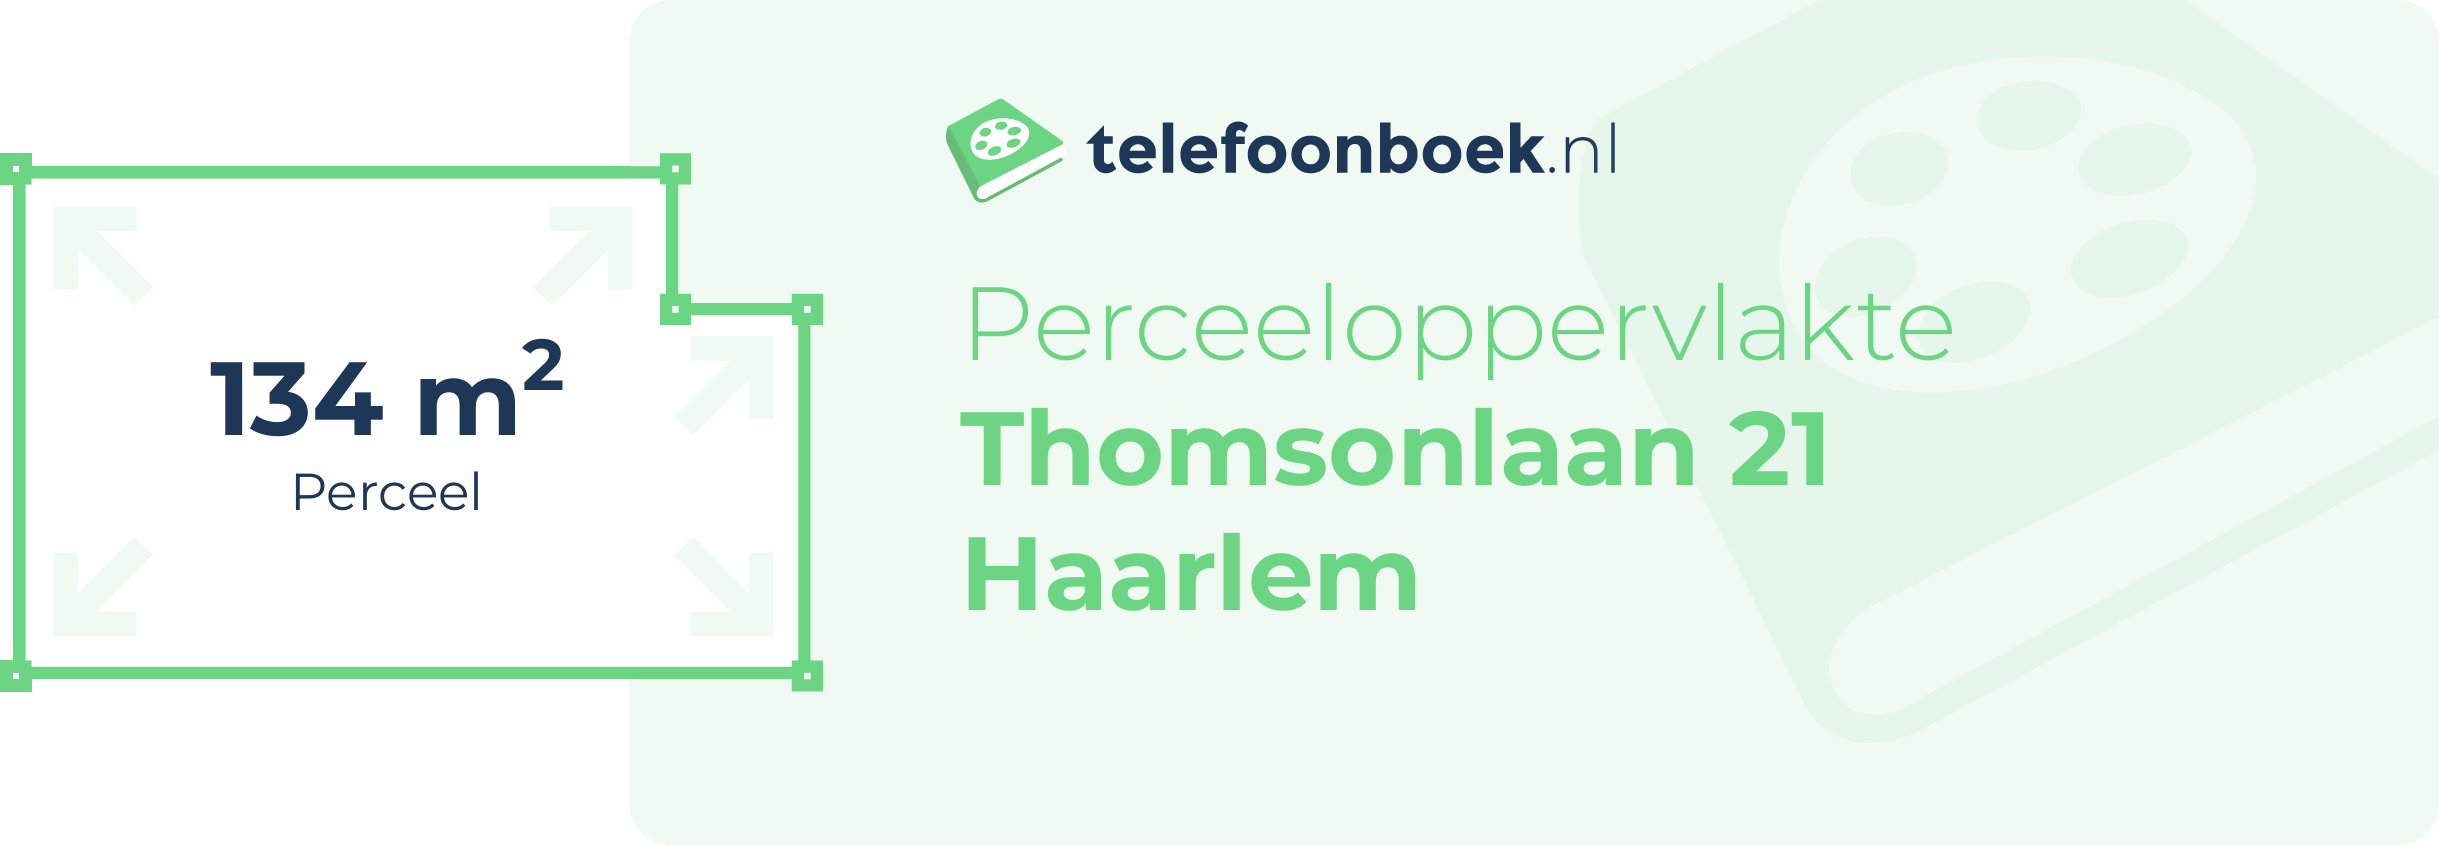 Perceeloppervlakte Thomsonlaan 21 Haarlem